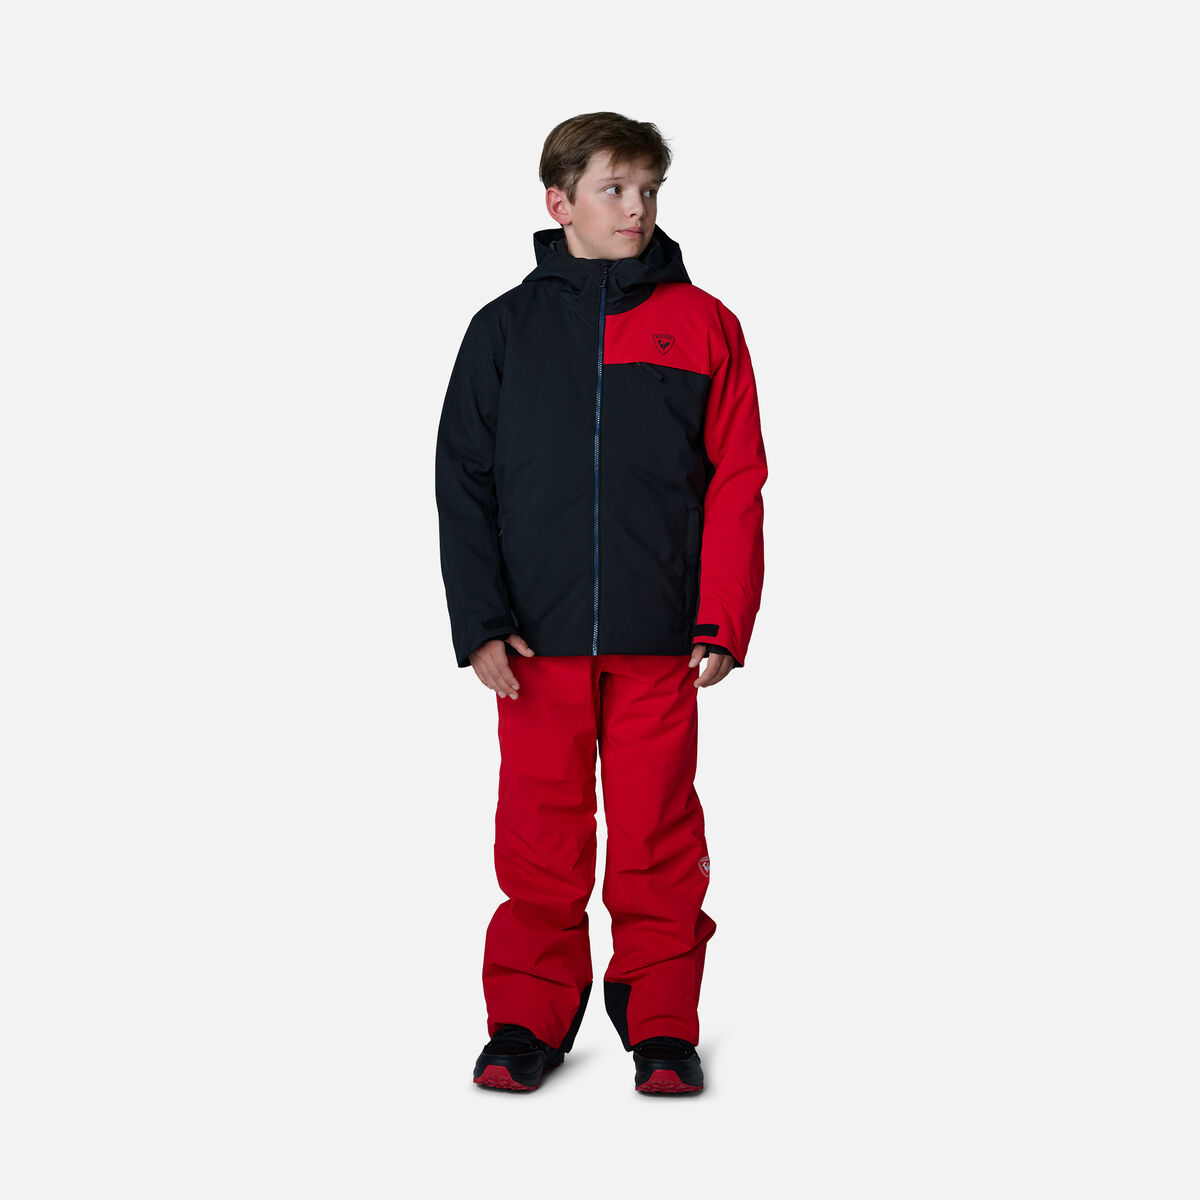 Juniors' Bicolor Ski Jacket